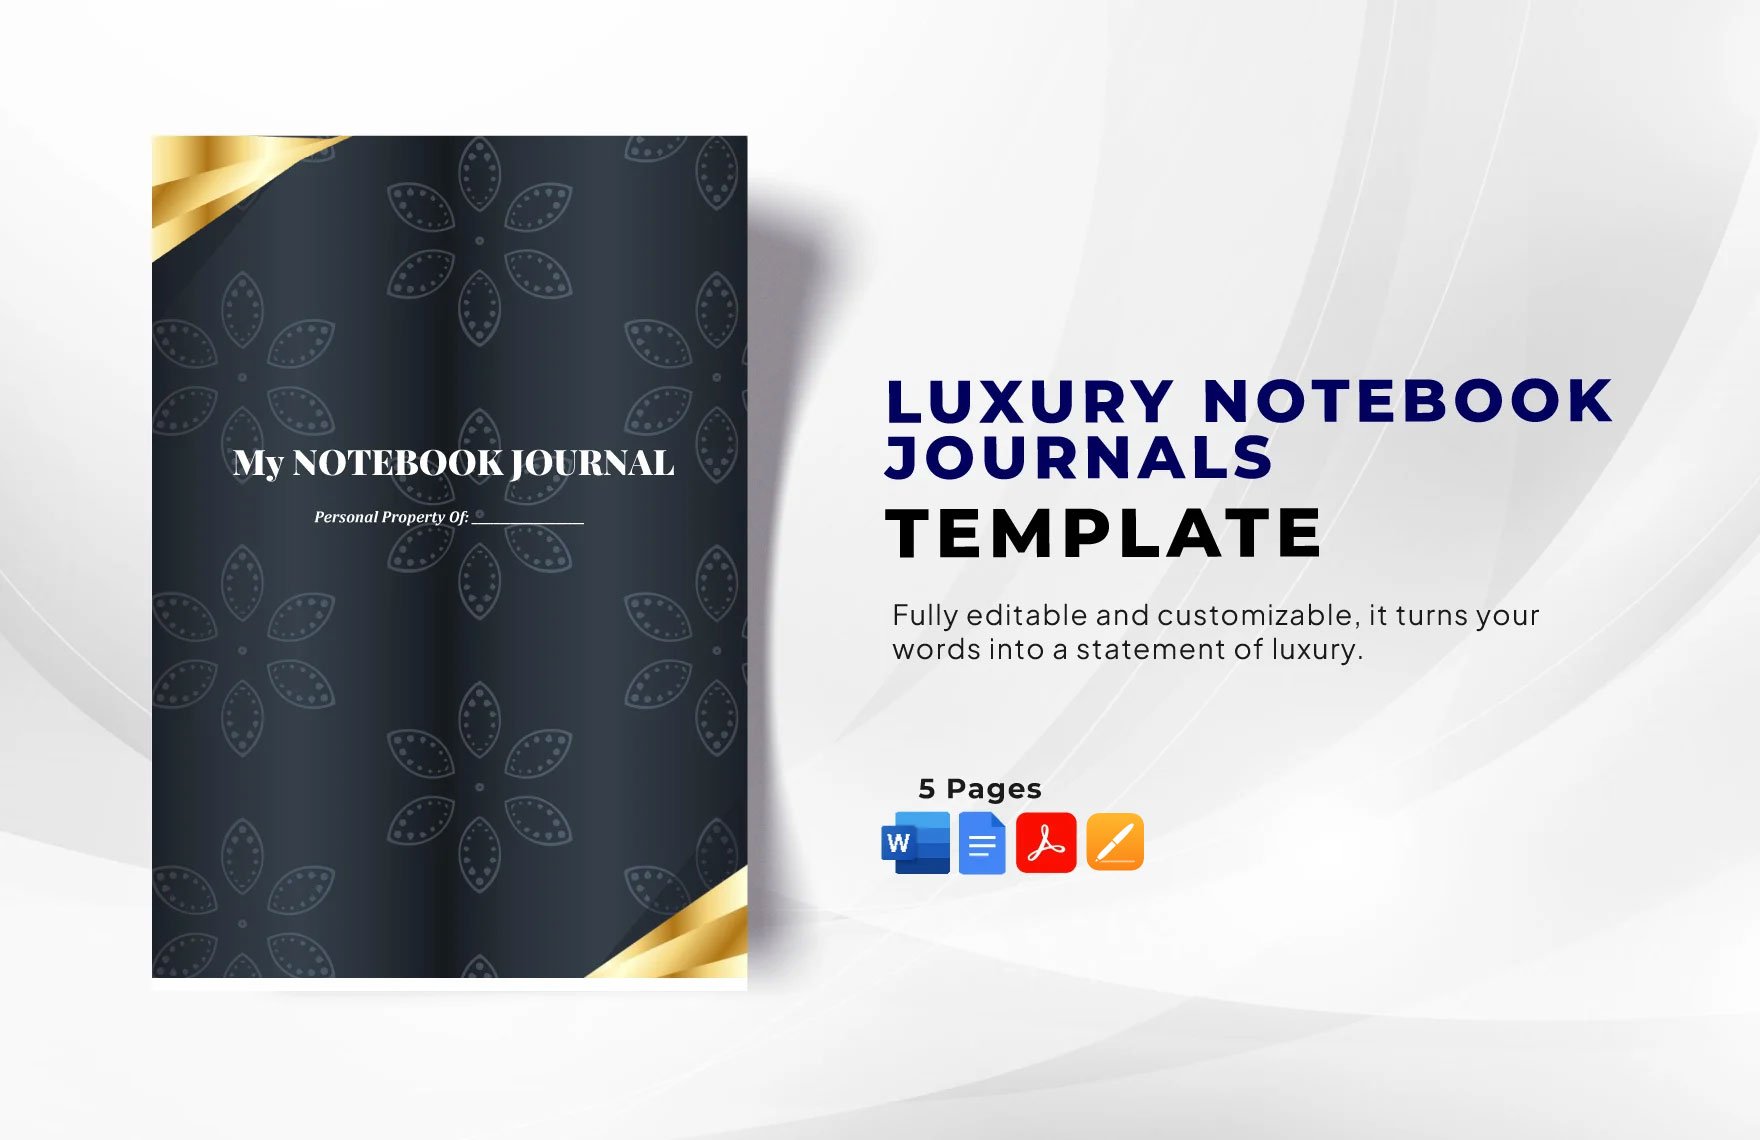 Luxury Notebook Journals Template